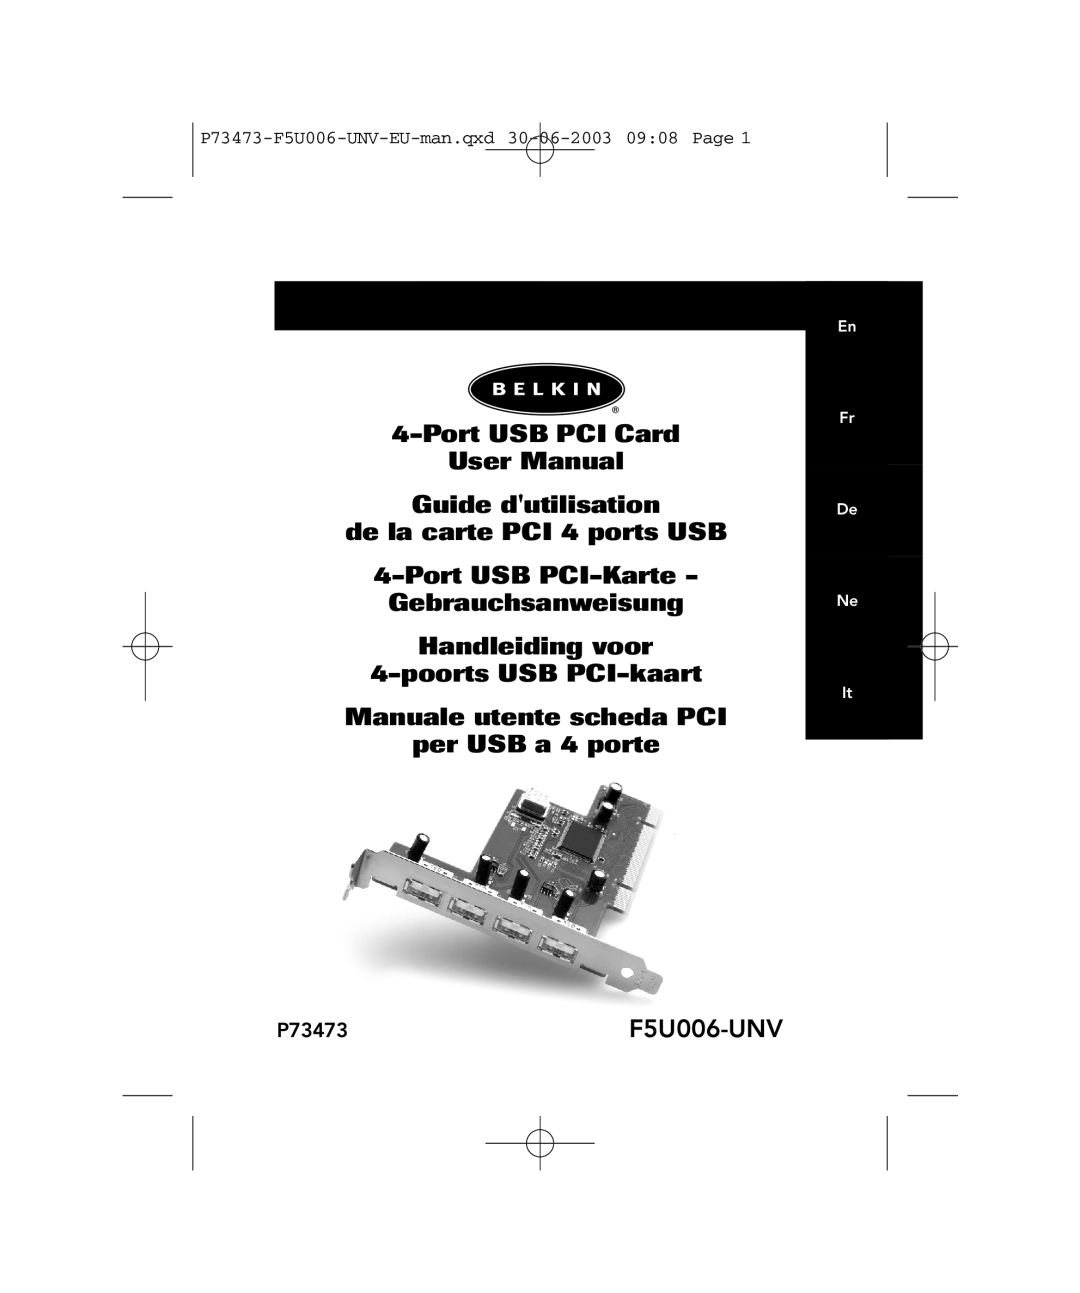 Belkin P73473 F5U006-UNV user manual P73473-F5U006-UNV-EU-man.qxd 30-06-2003 0908 Page, per USB a 4 porte, En Fr De Ne It 